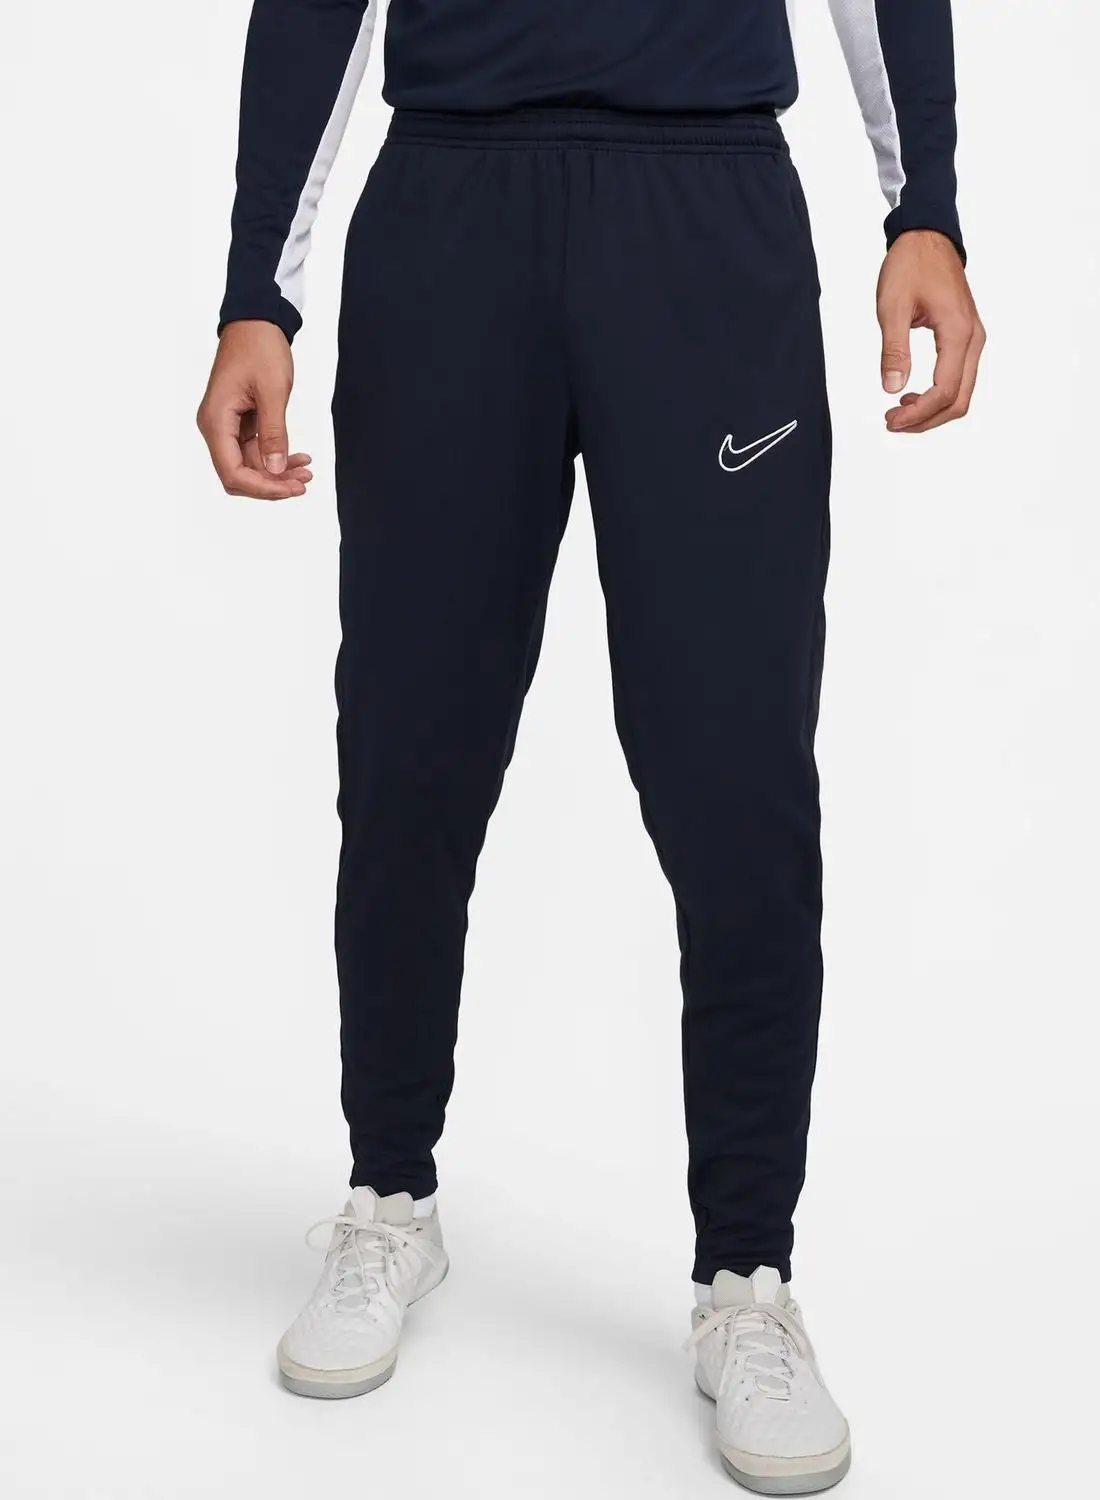 Nike Dri-Fit Acd23 Pants